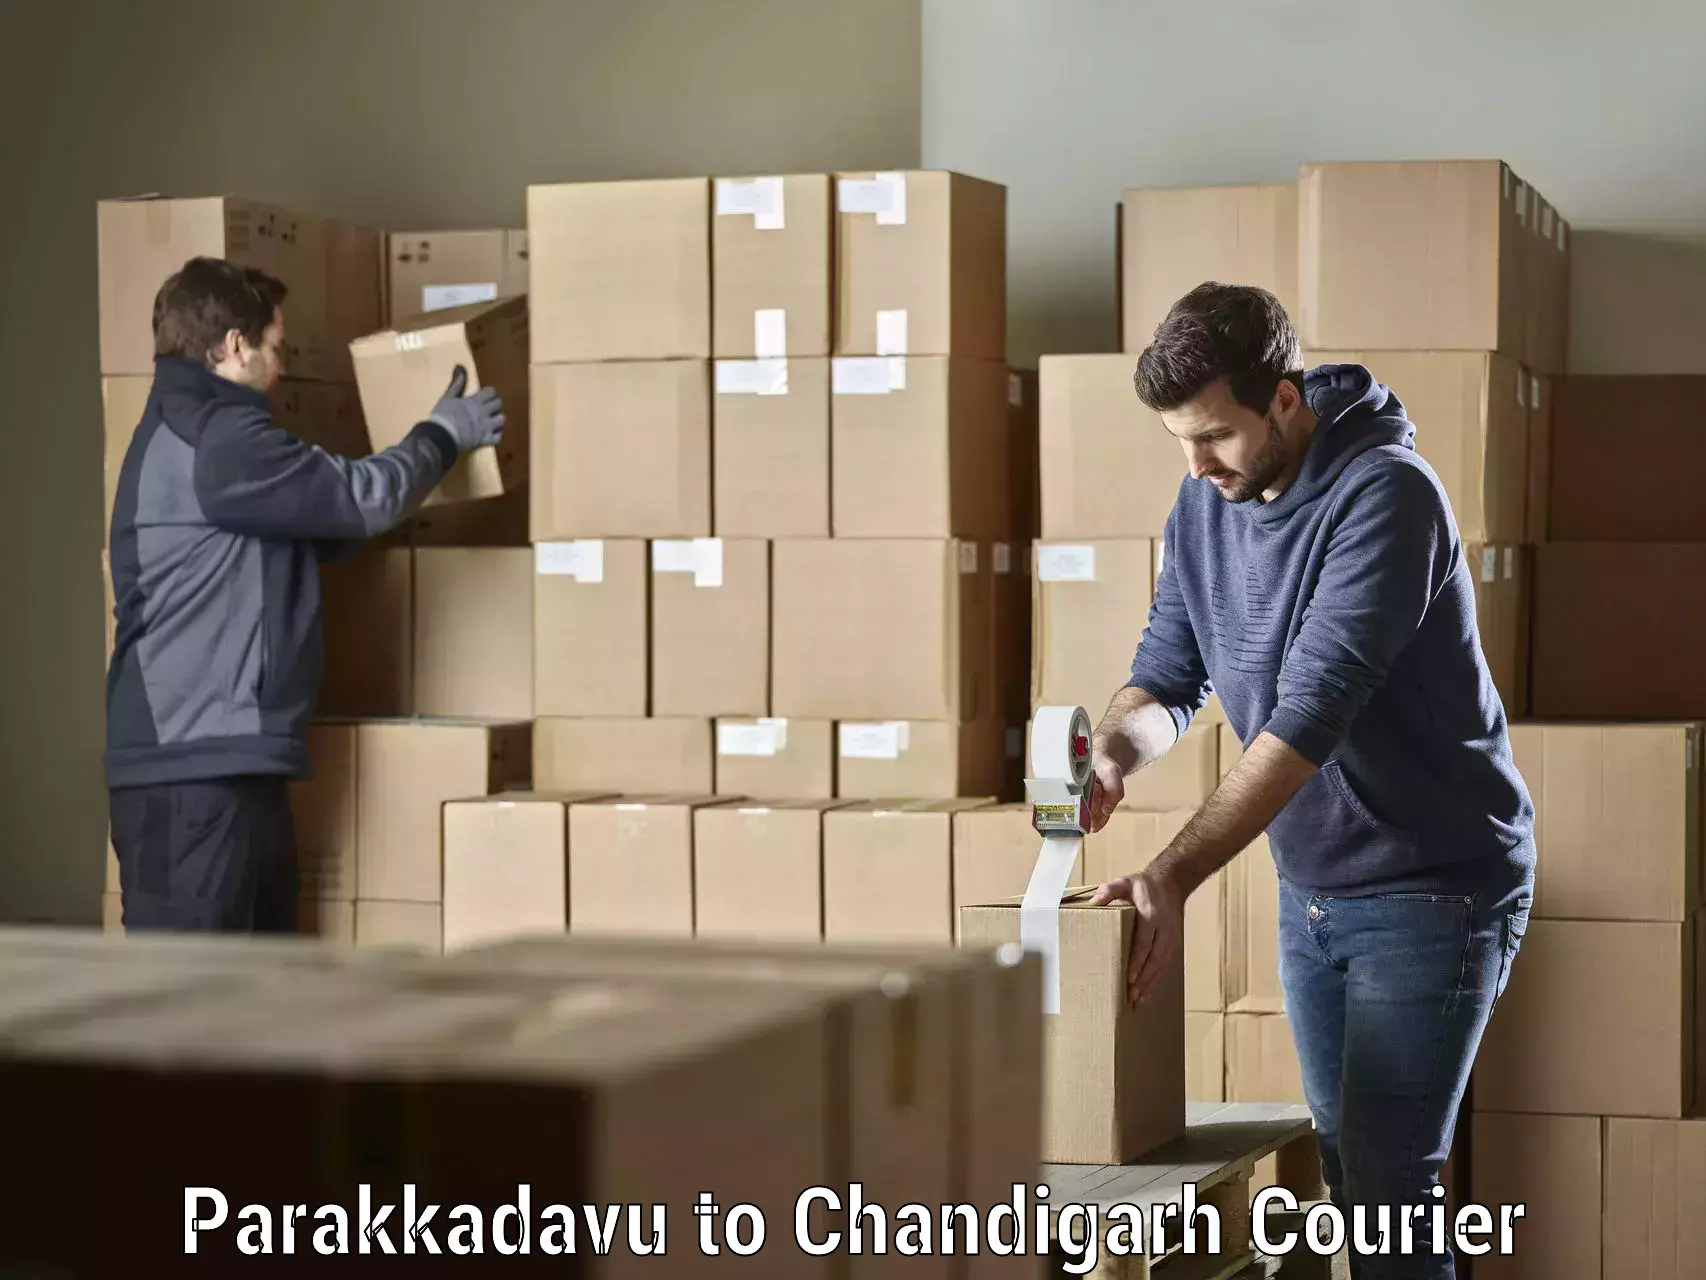 Same-day delivery solutions Parakkadavu to Chandigarh